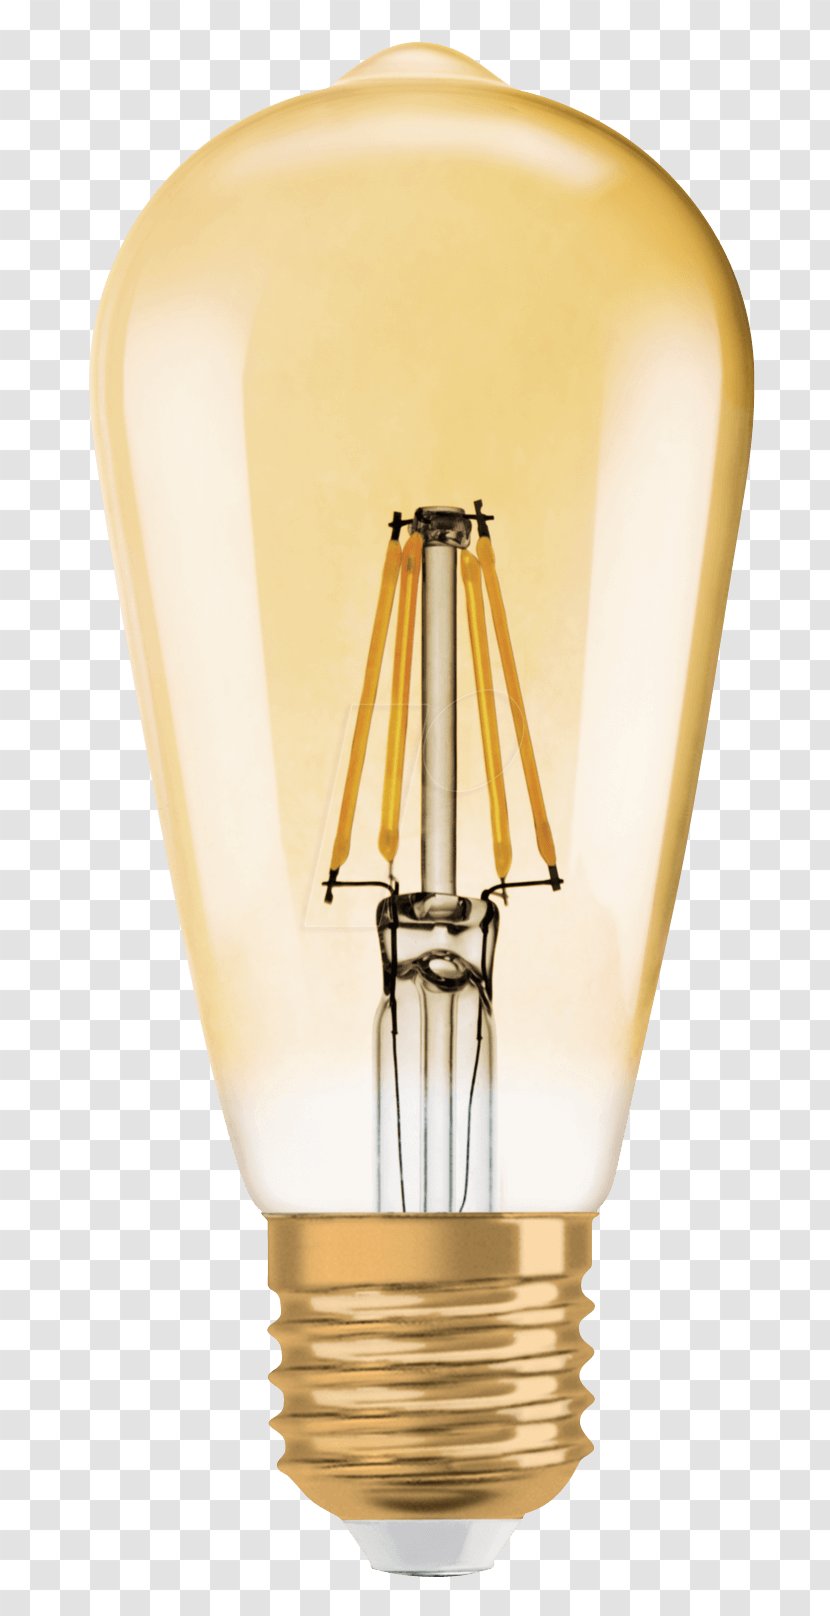 LED Lamp Filament Incandescent Light Bulb Fixture Lighting - Edison Screw Transparent PNG